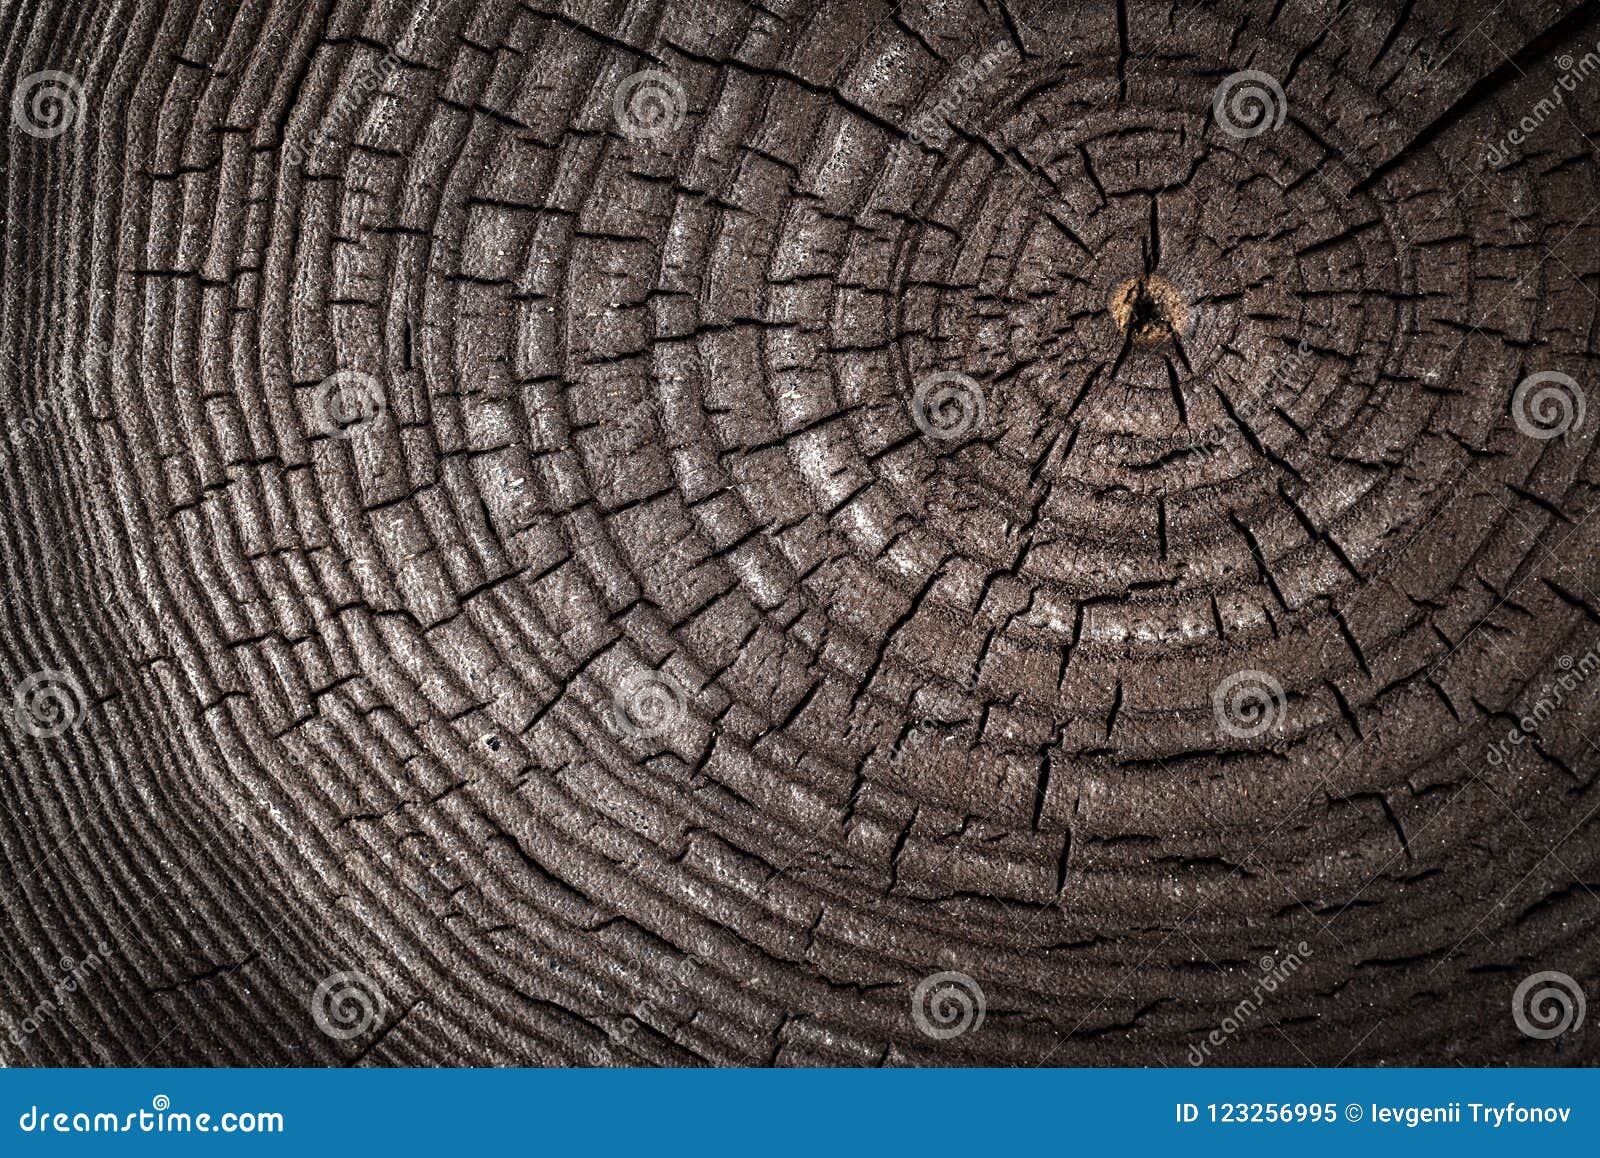 wood old ash texture of cut tree trunk, close-up. macro shot. as